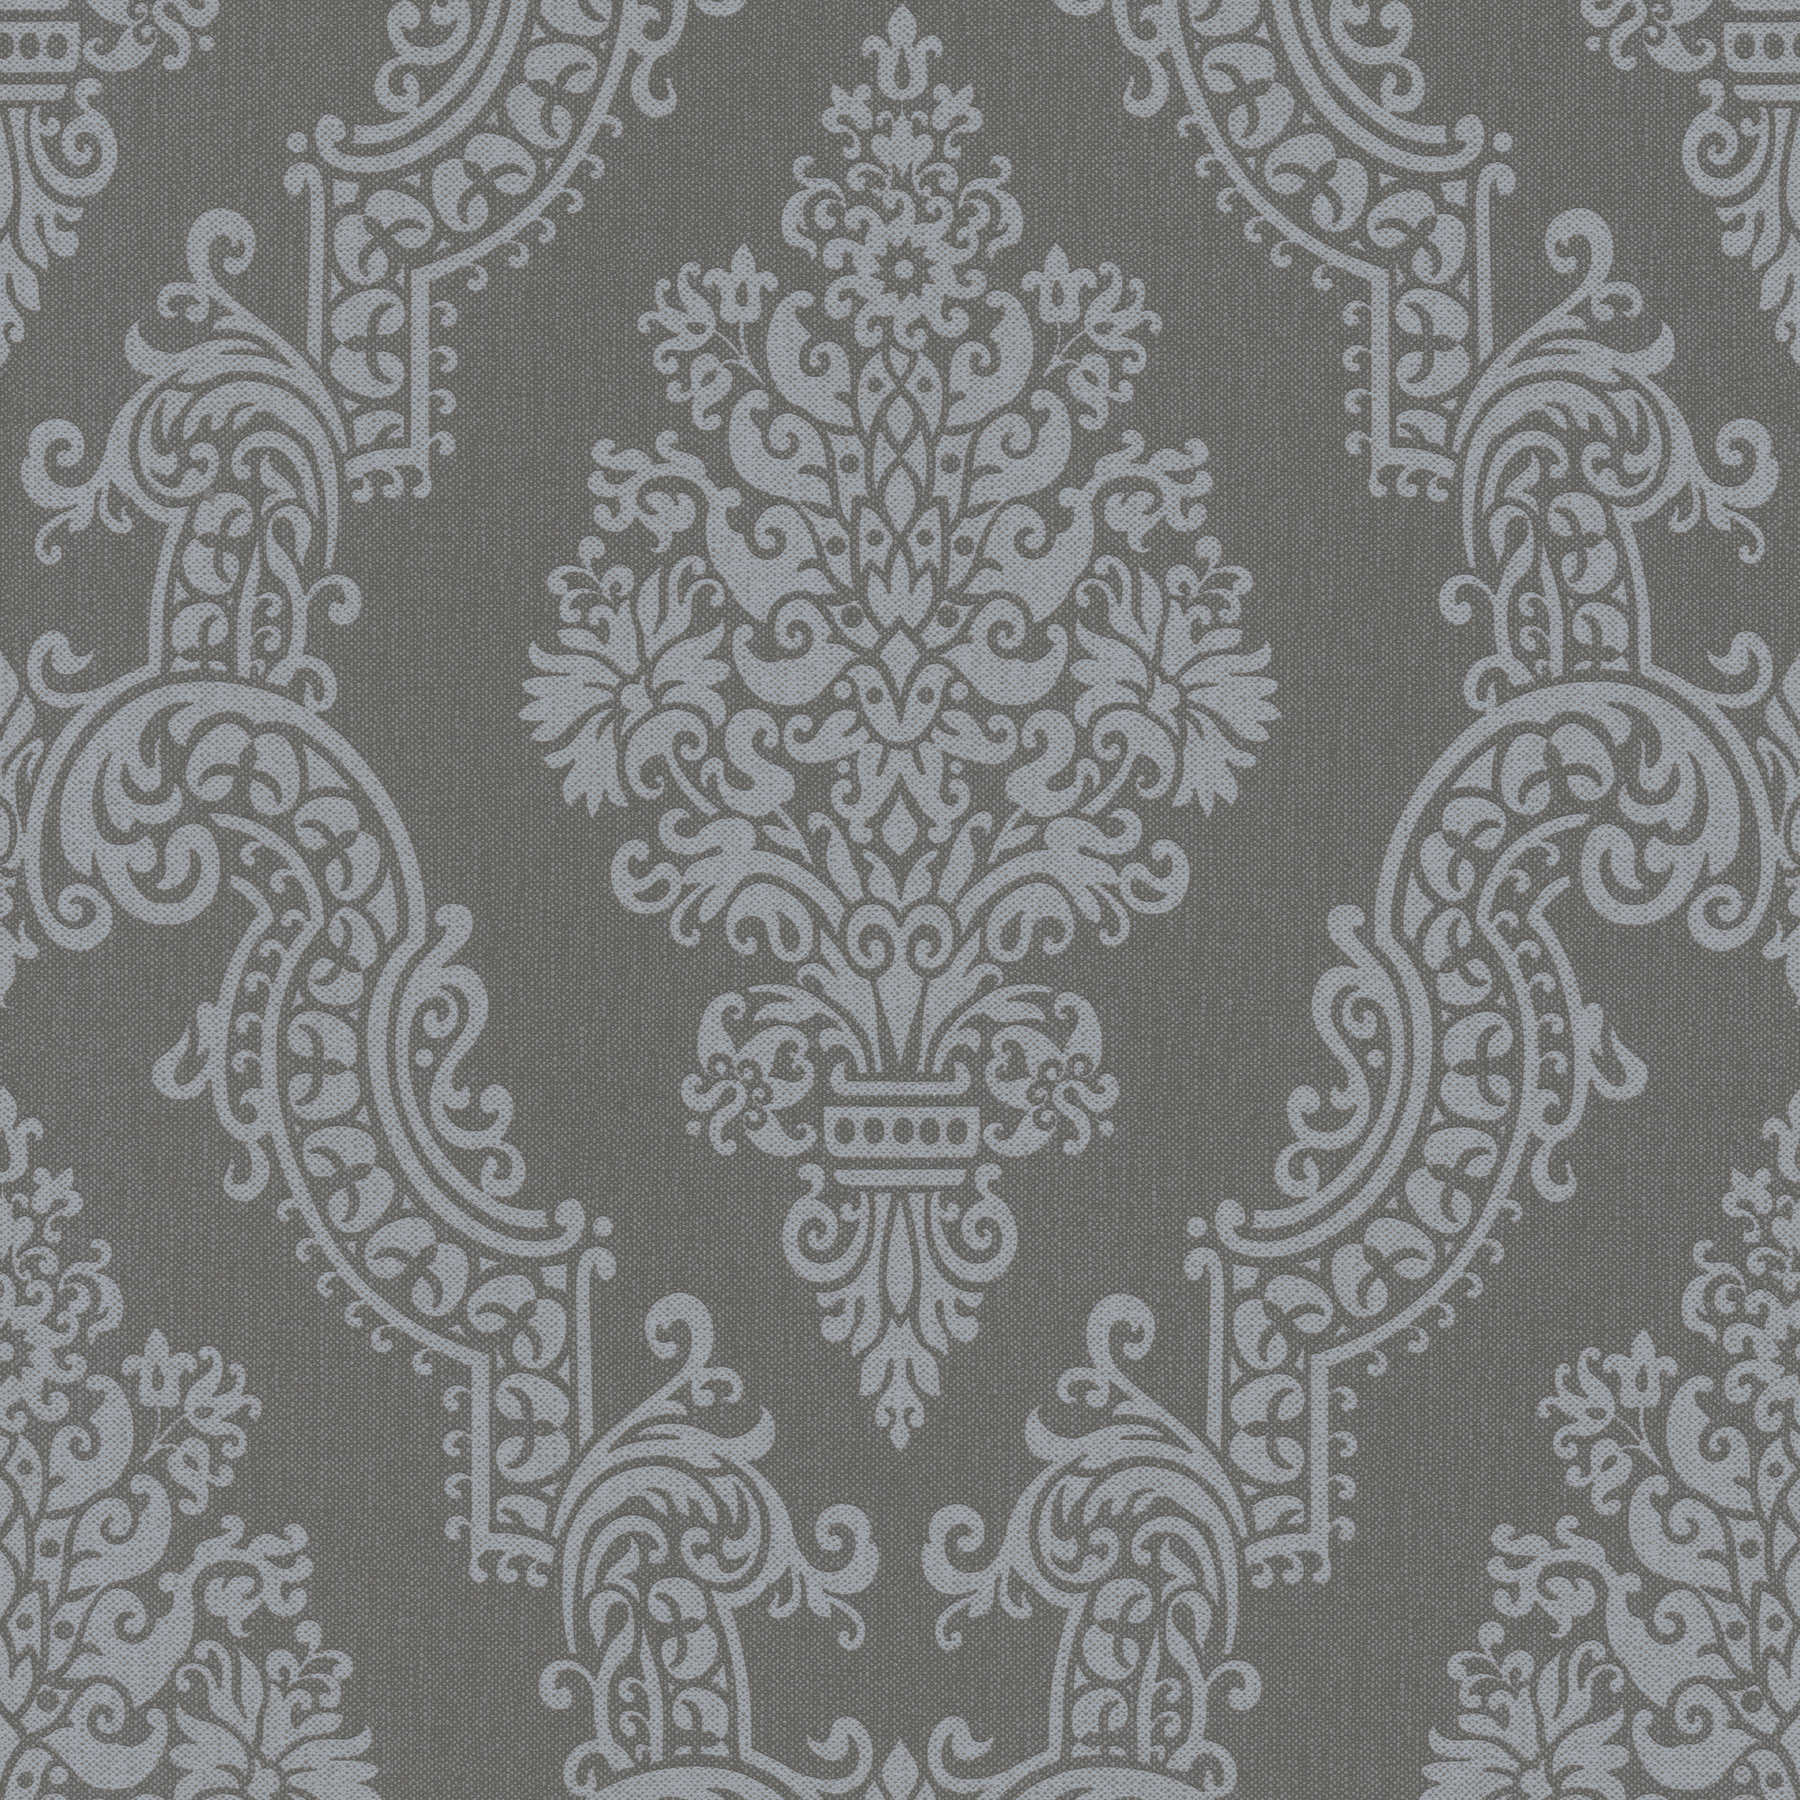         Klassische Ornament-Tapete mit floralem Muster – Grau
    